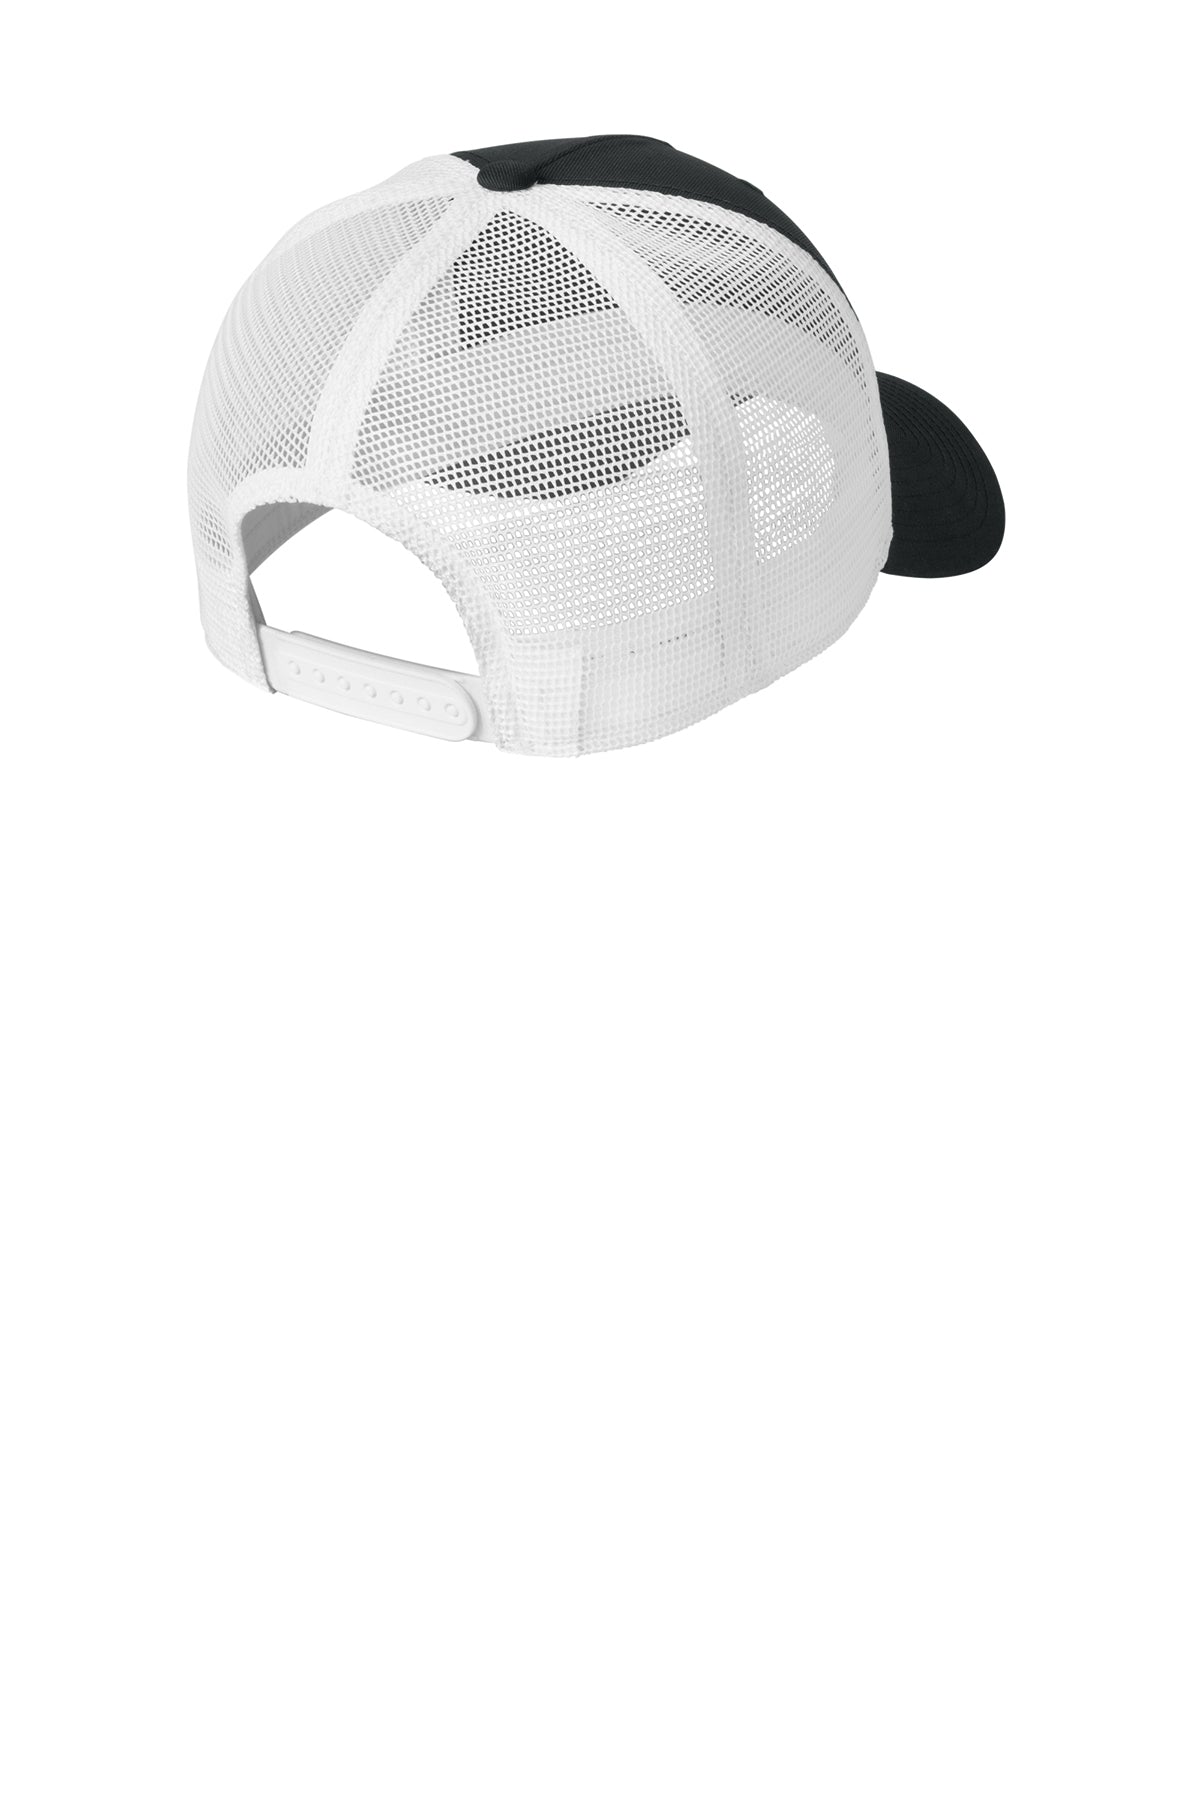 Nike Snapback Mesh Trucker Custom Caps, Black / White